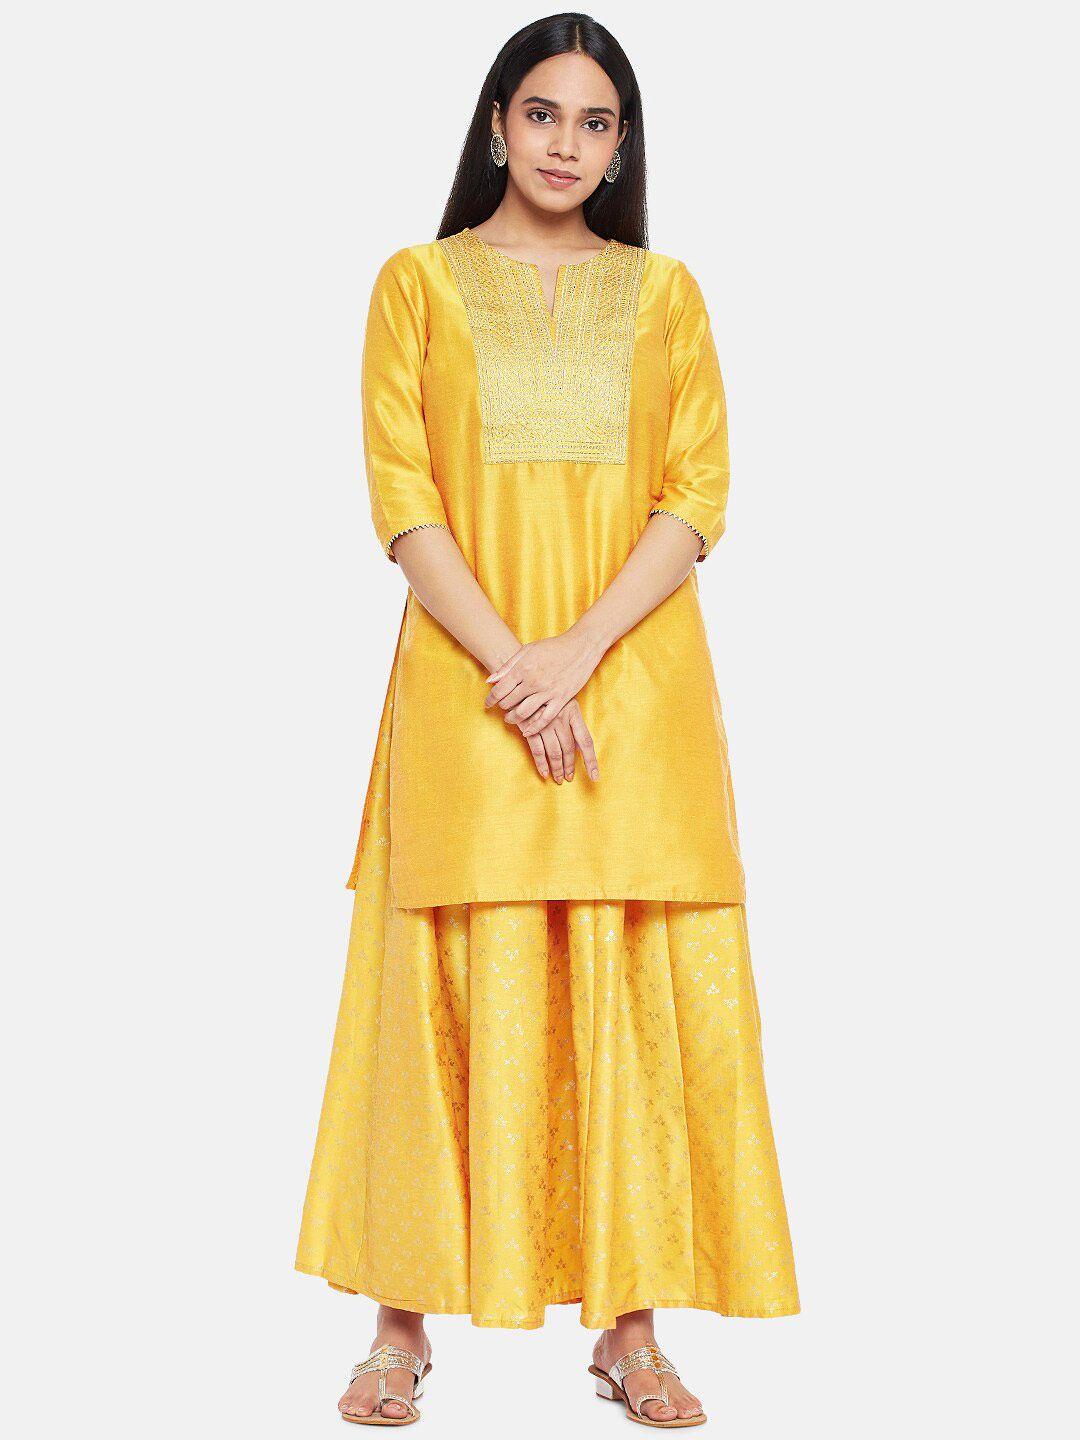 rangmanch by pantaloons women yellow floral yoke design gotta patti kurta with skirt